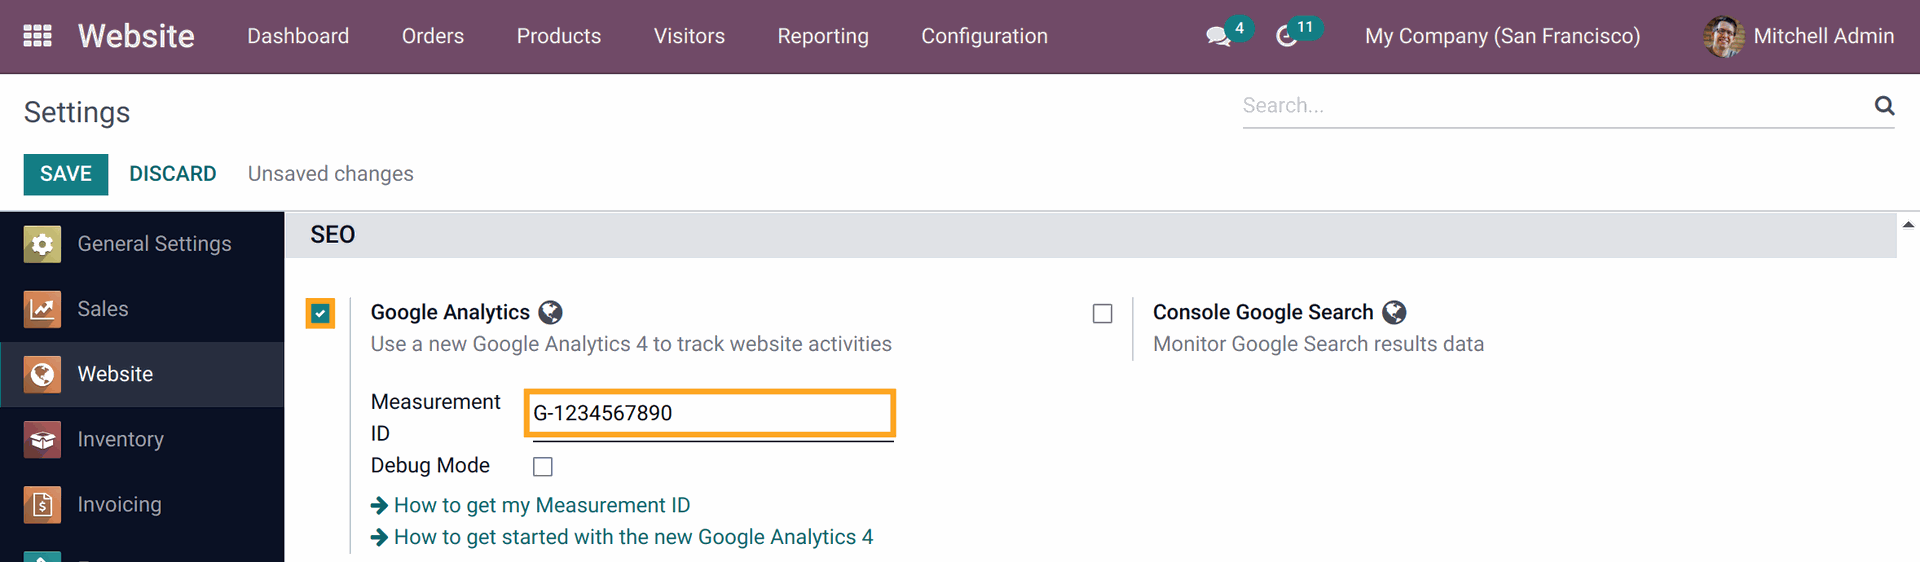 Odoo 12.0 Google Analytics 4 Global Site Tag (gtag.js) configuration